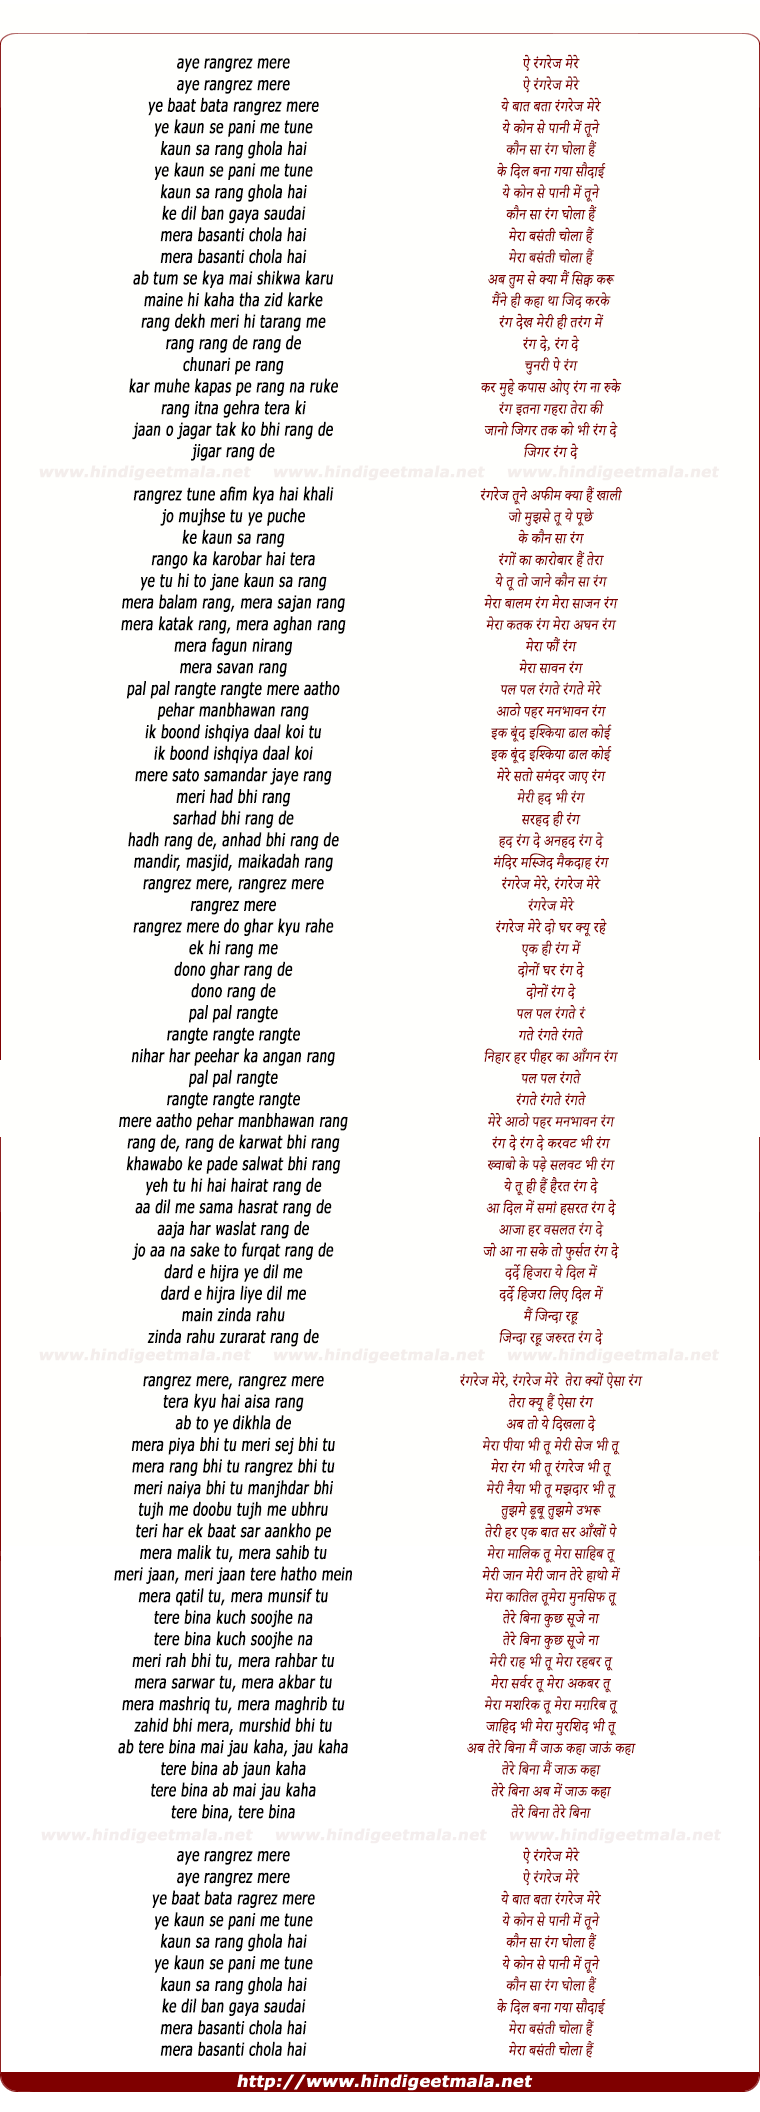 lyrics of song Ae Rangrez Mere Ye Baat Btaa